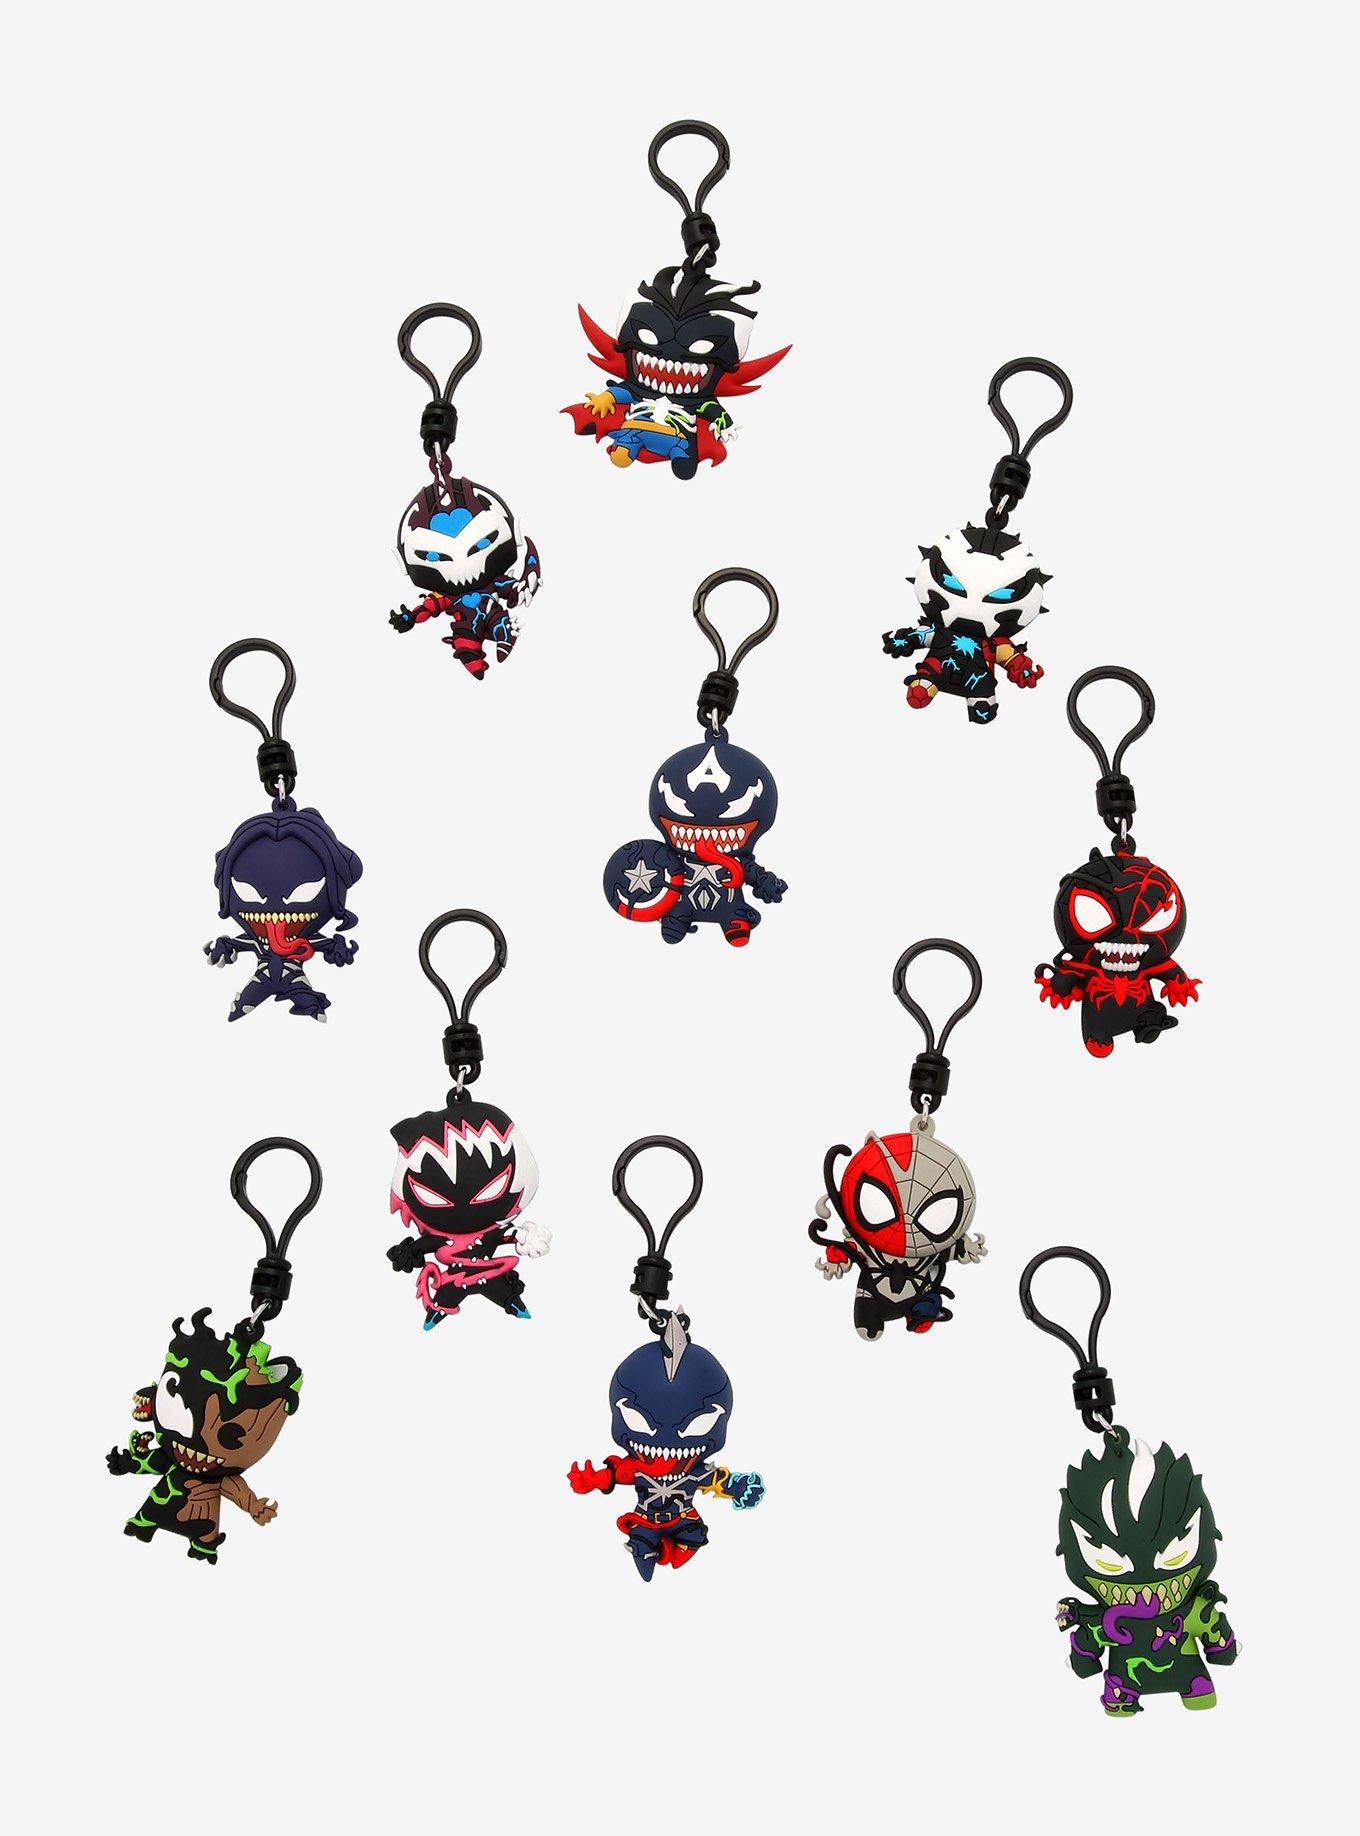 Marvel Spider-Man: Maximum Venom Series 2 Chibi Blind Bag Figural Key Chain